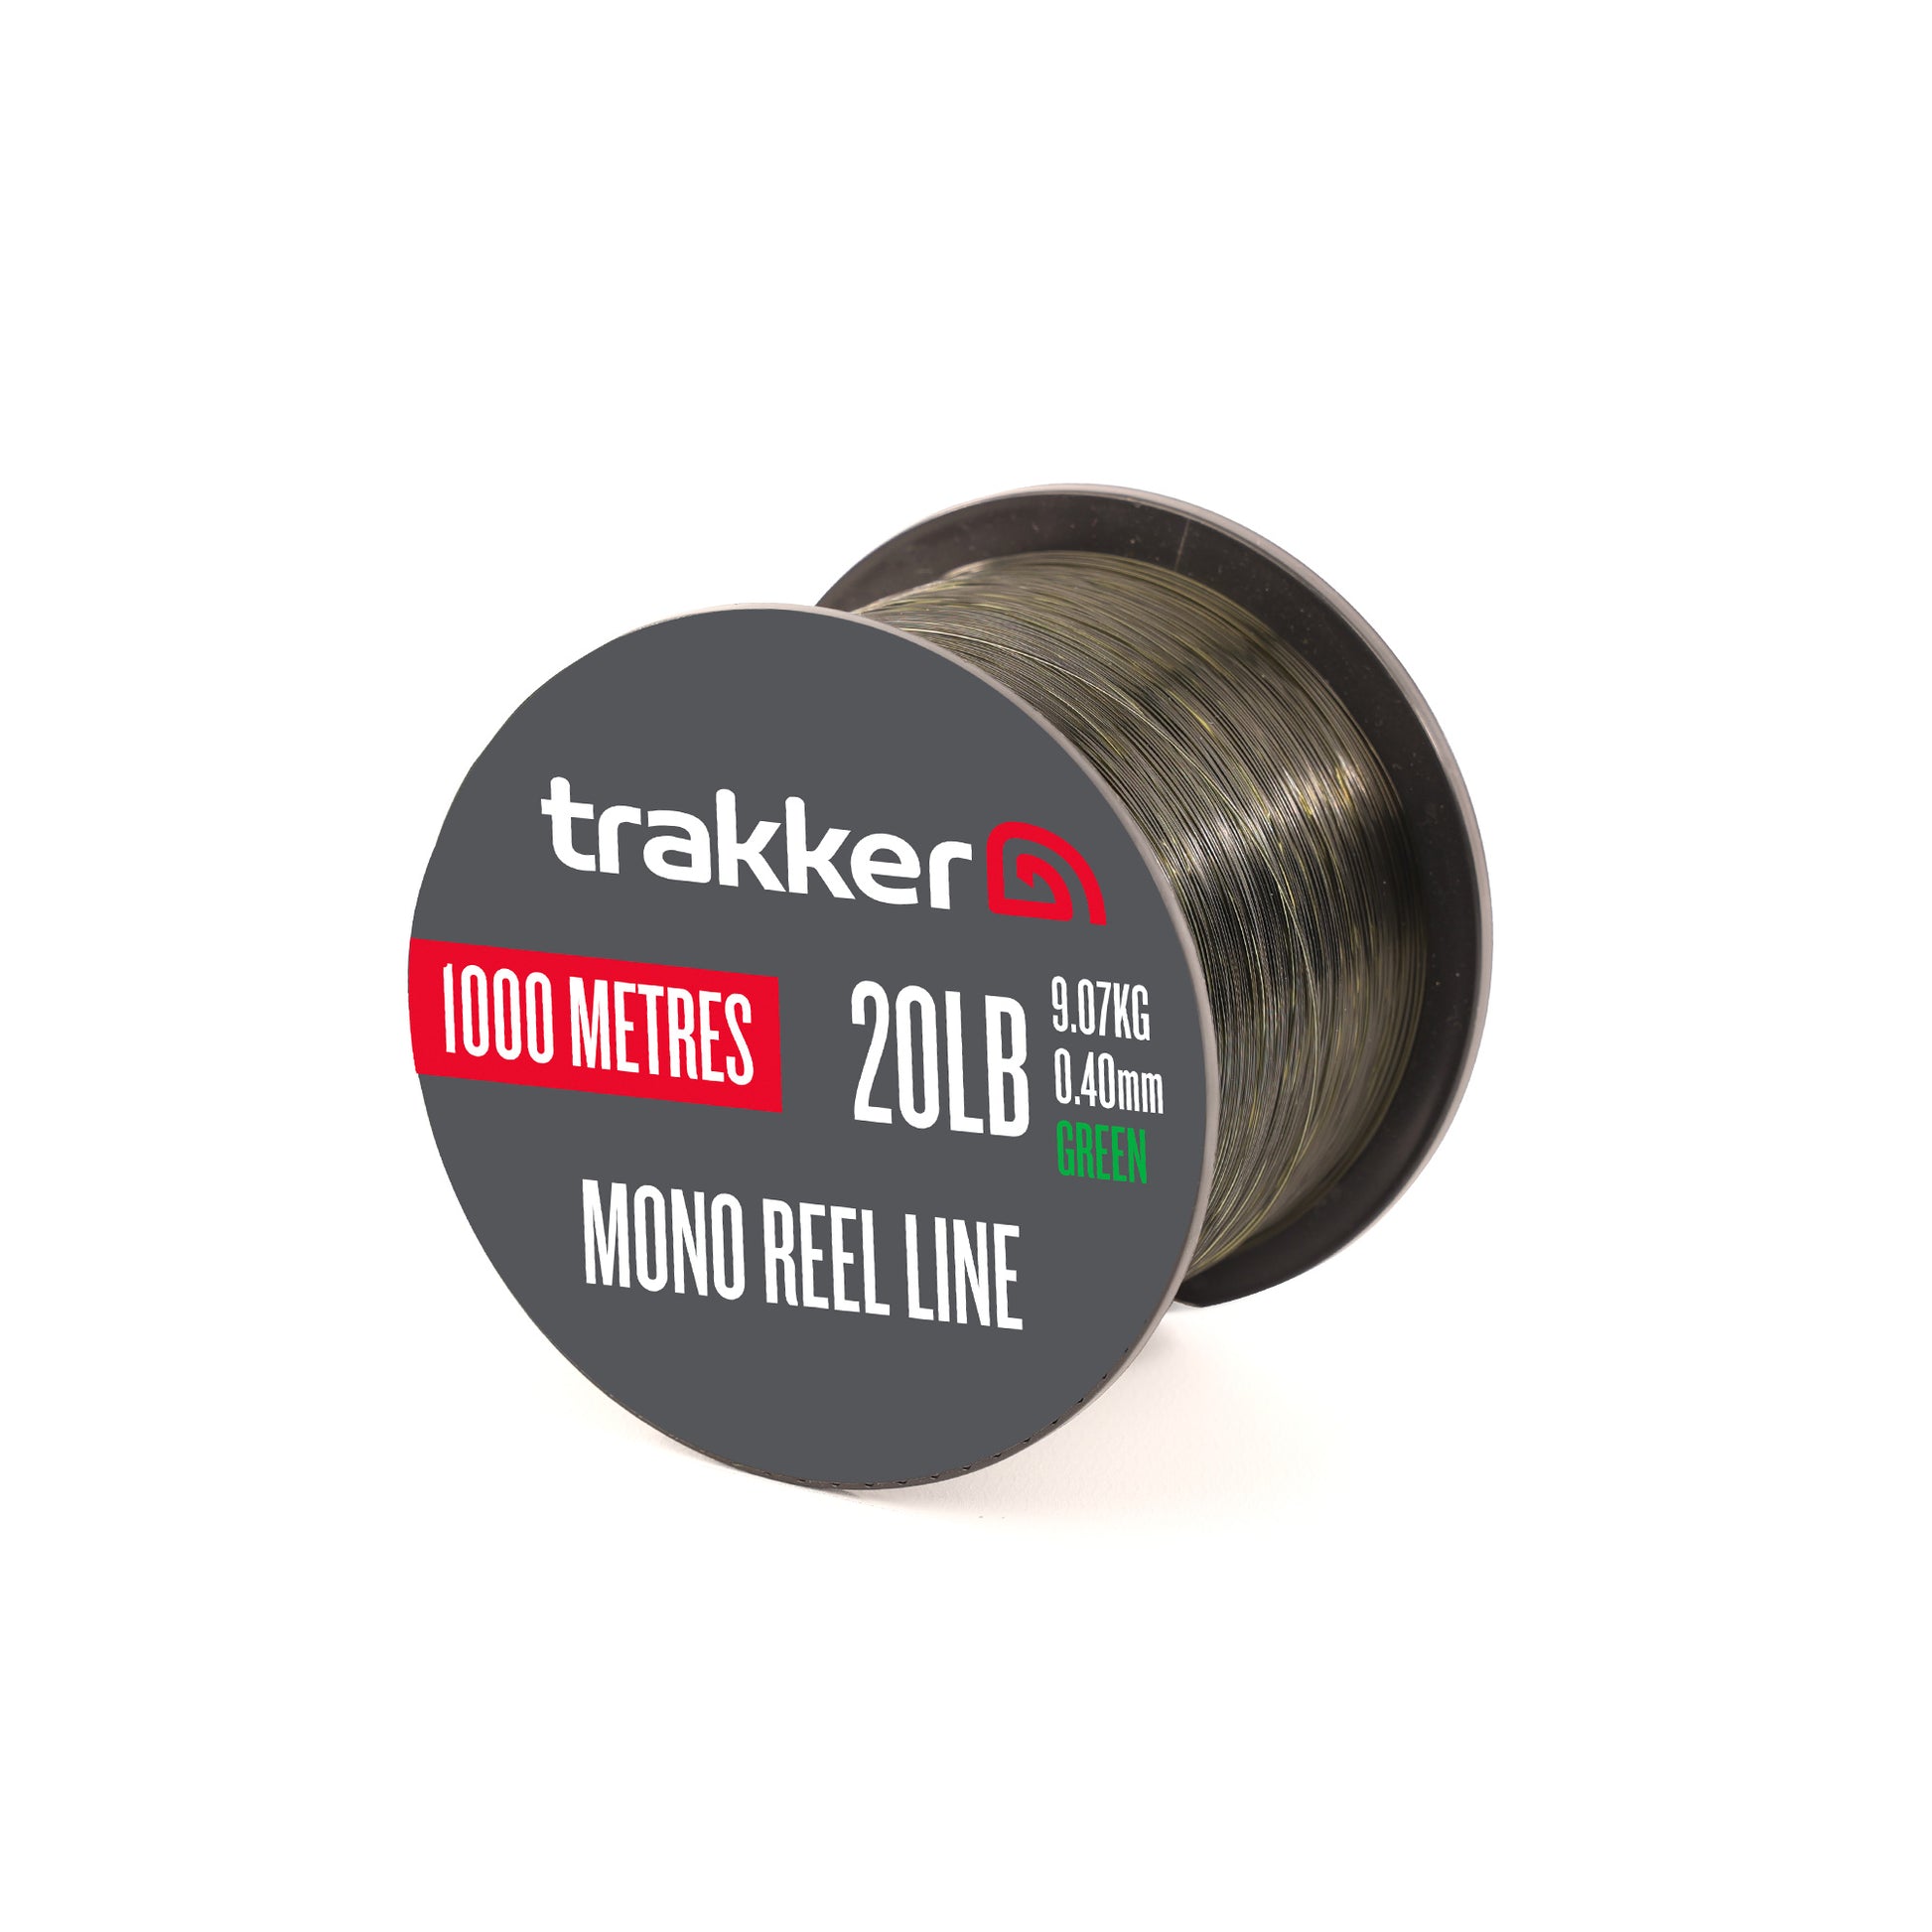 TRAKKER TRAKKER Mono Reel Line (1000m) TRAKKER Mono Reel Line (20lb)(9.07kg)(0.40mm)(1000m) - Parkfield Angling Centre